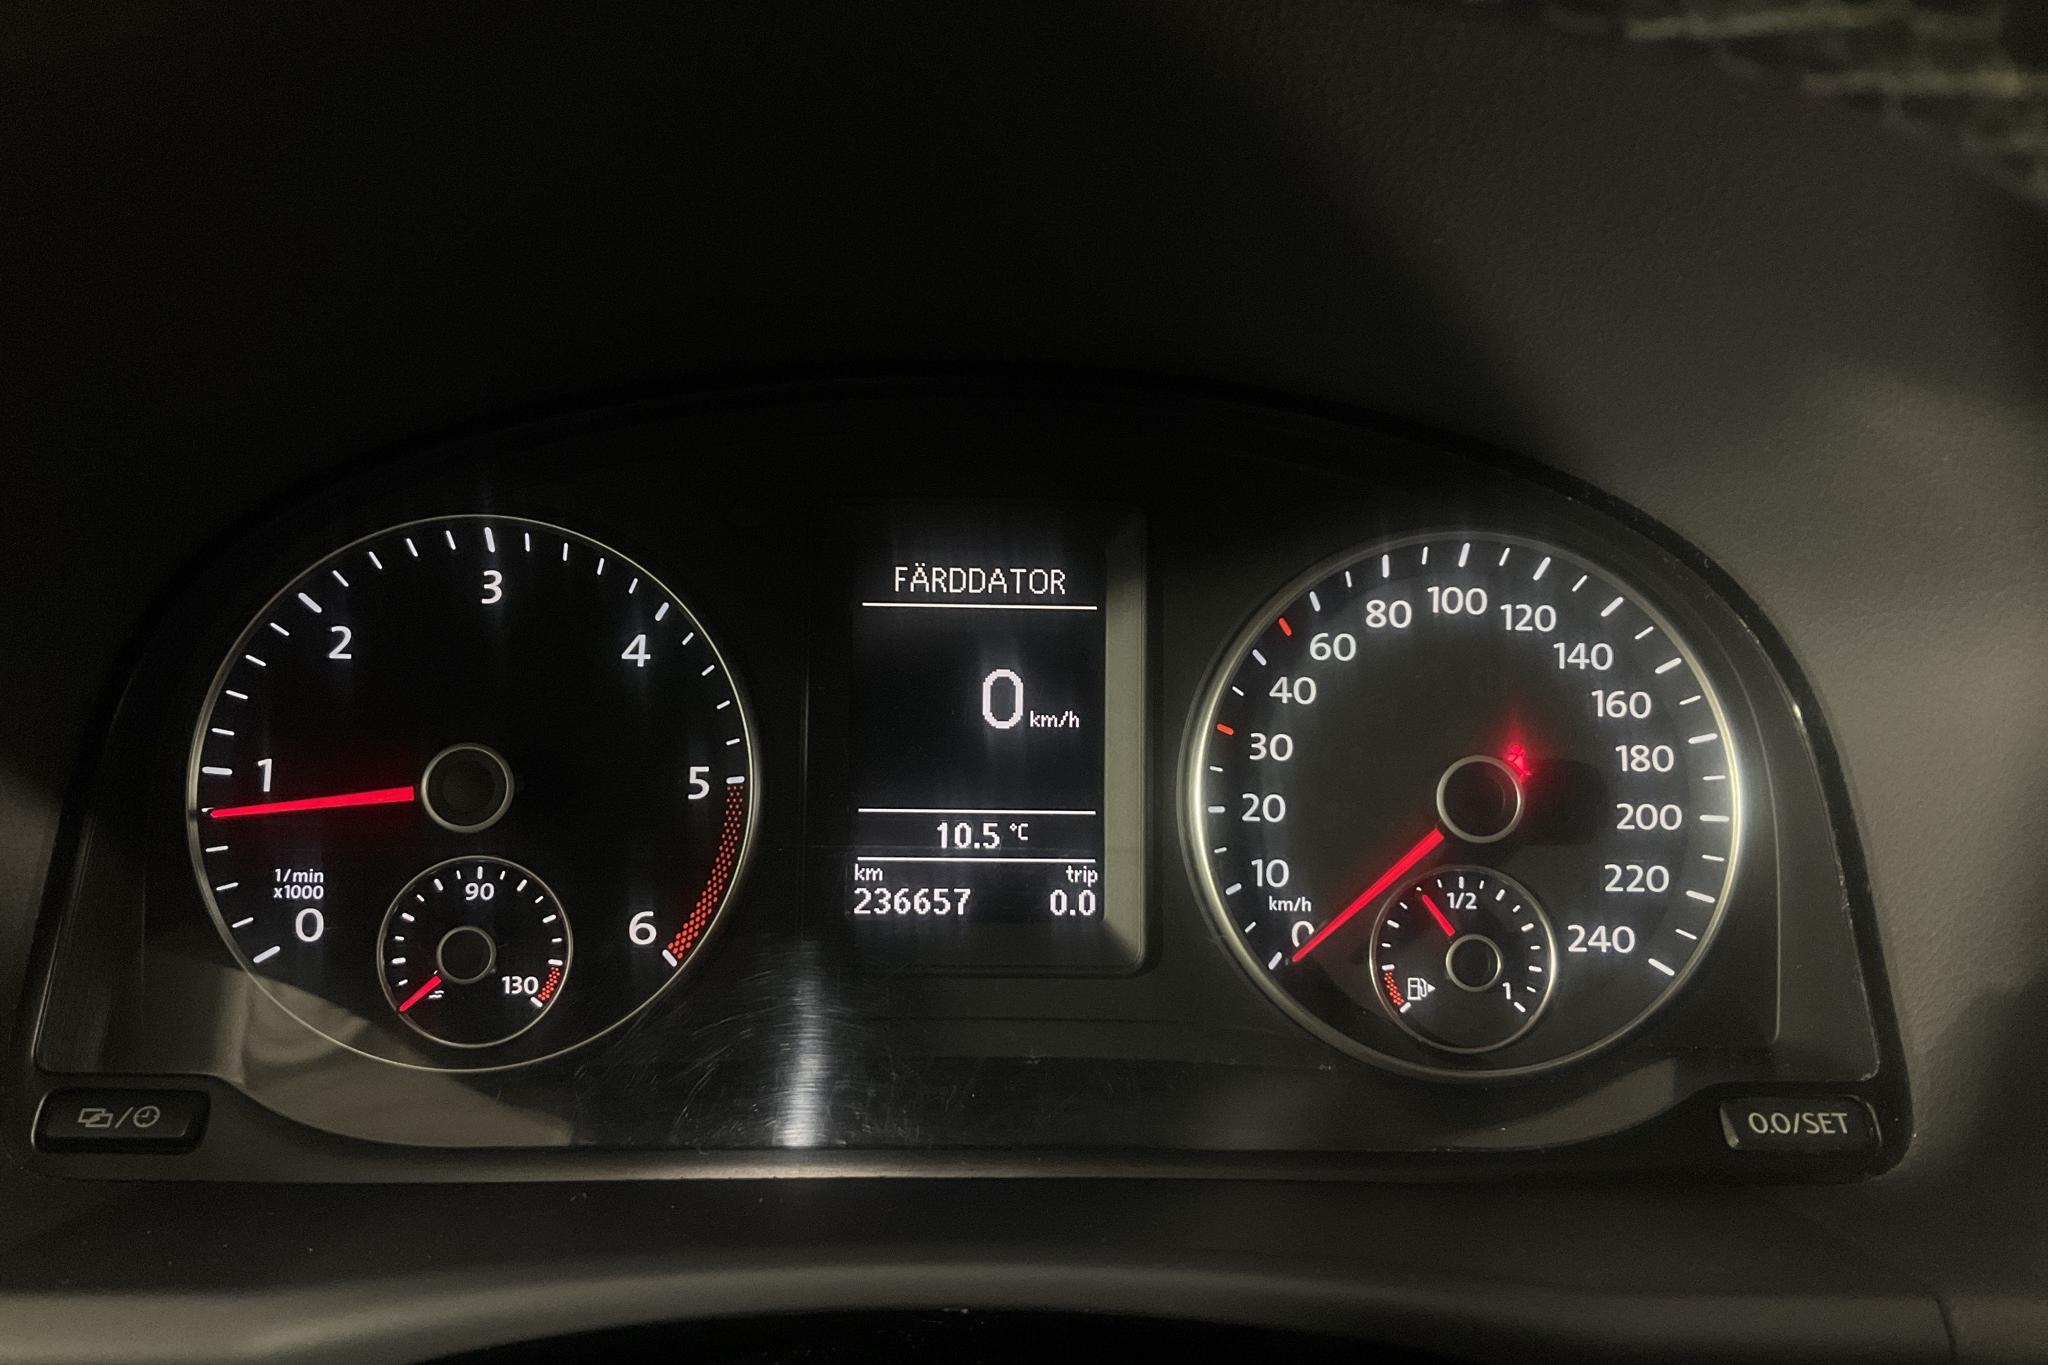 VW Touran 1.6 TDI BlueMotion Technology (105hk) - 23 666 mil - Manuell - vit - 2013